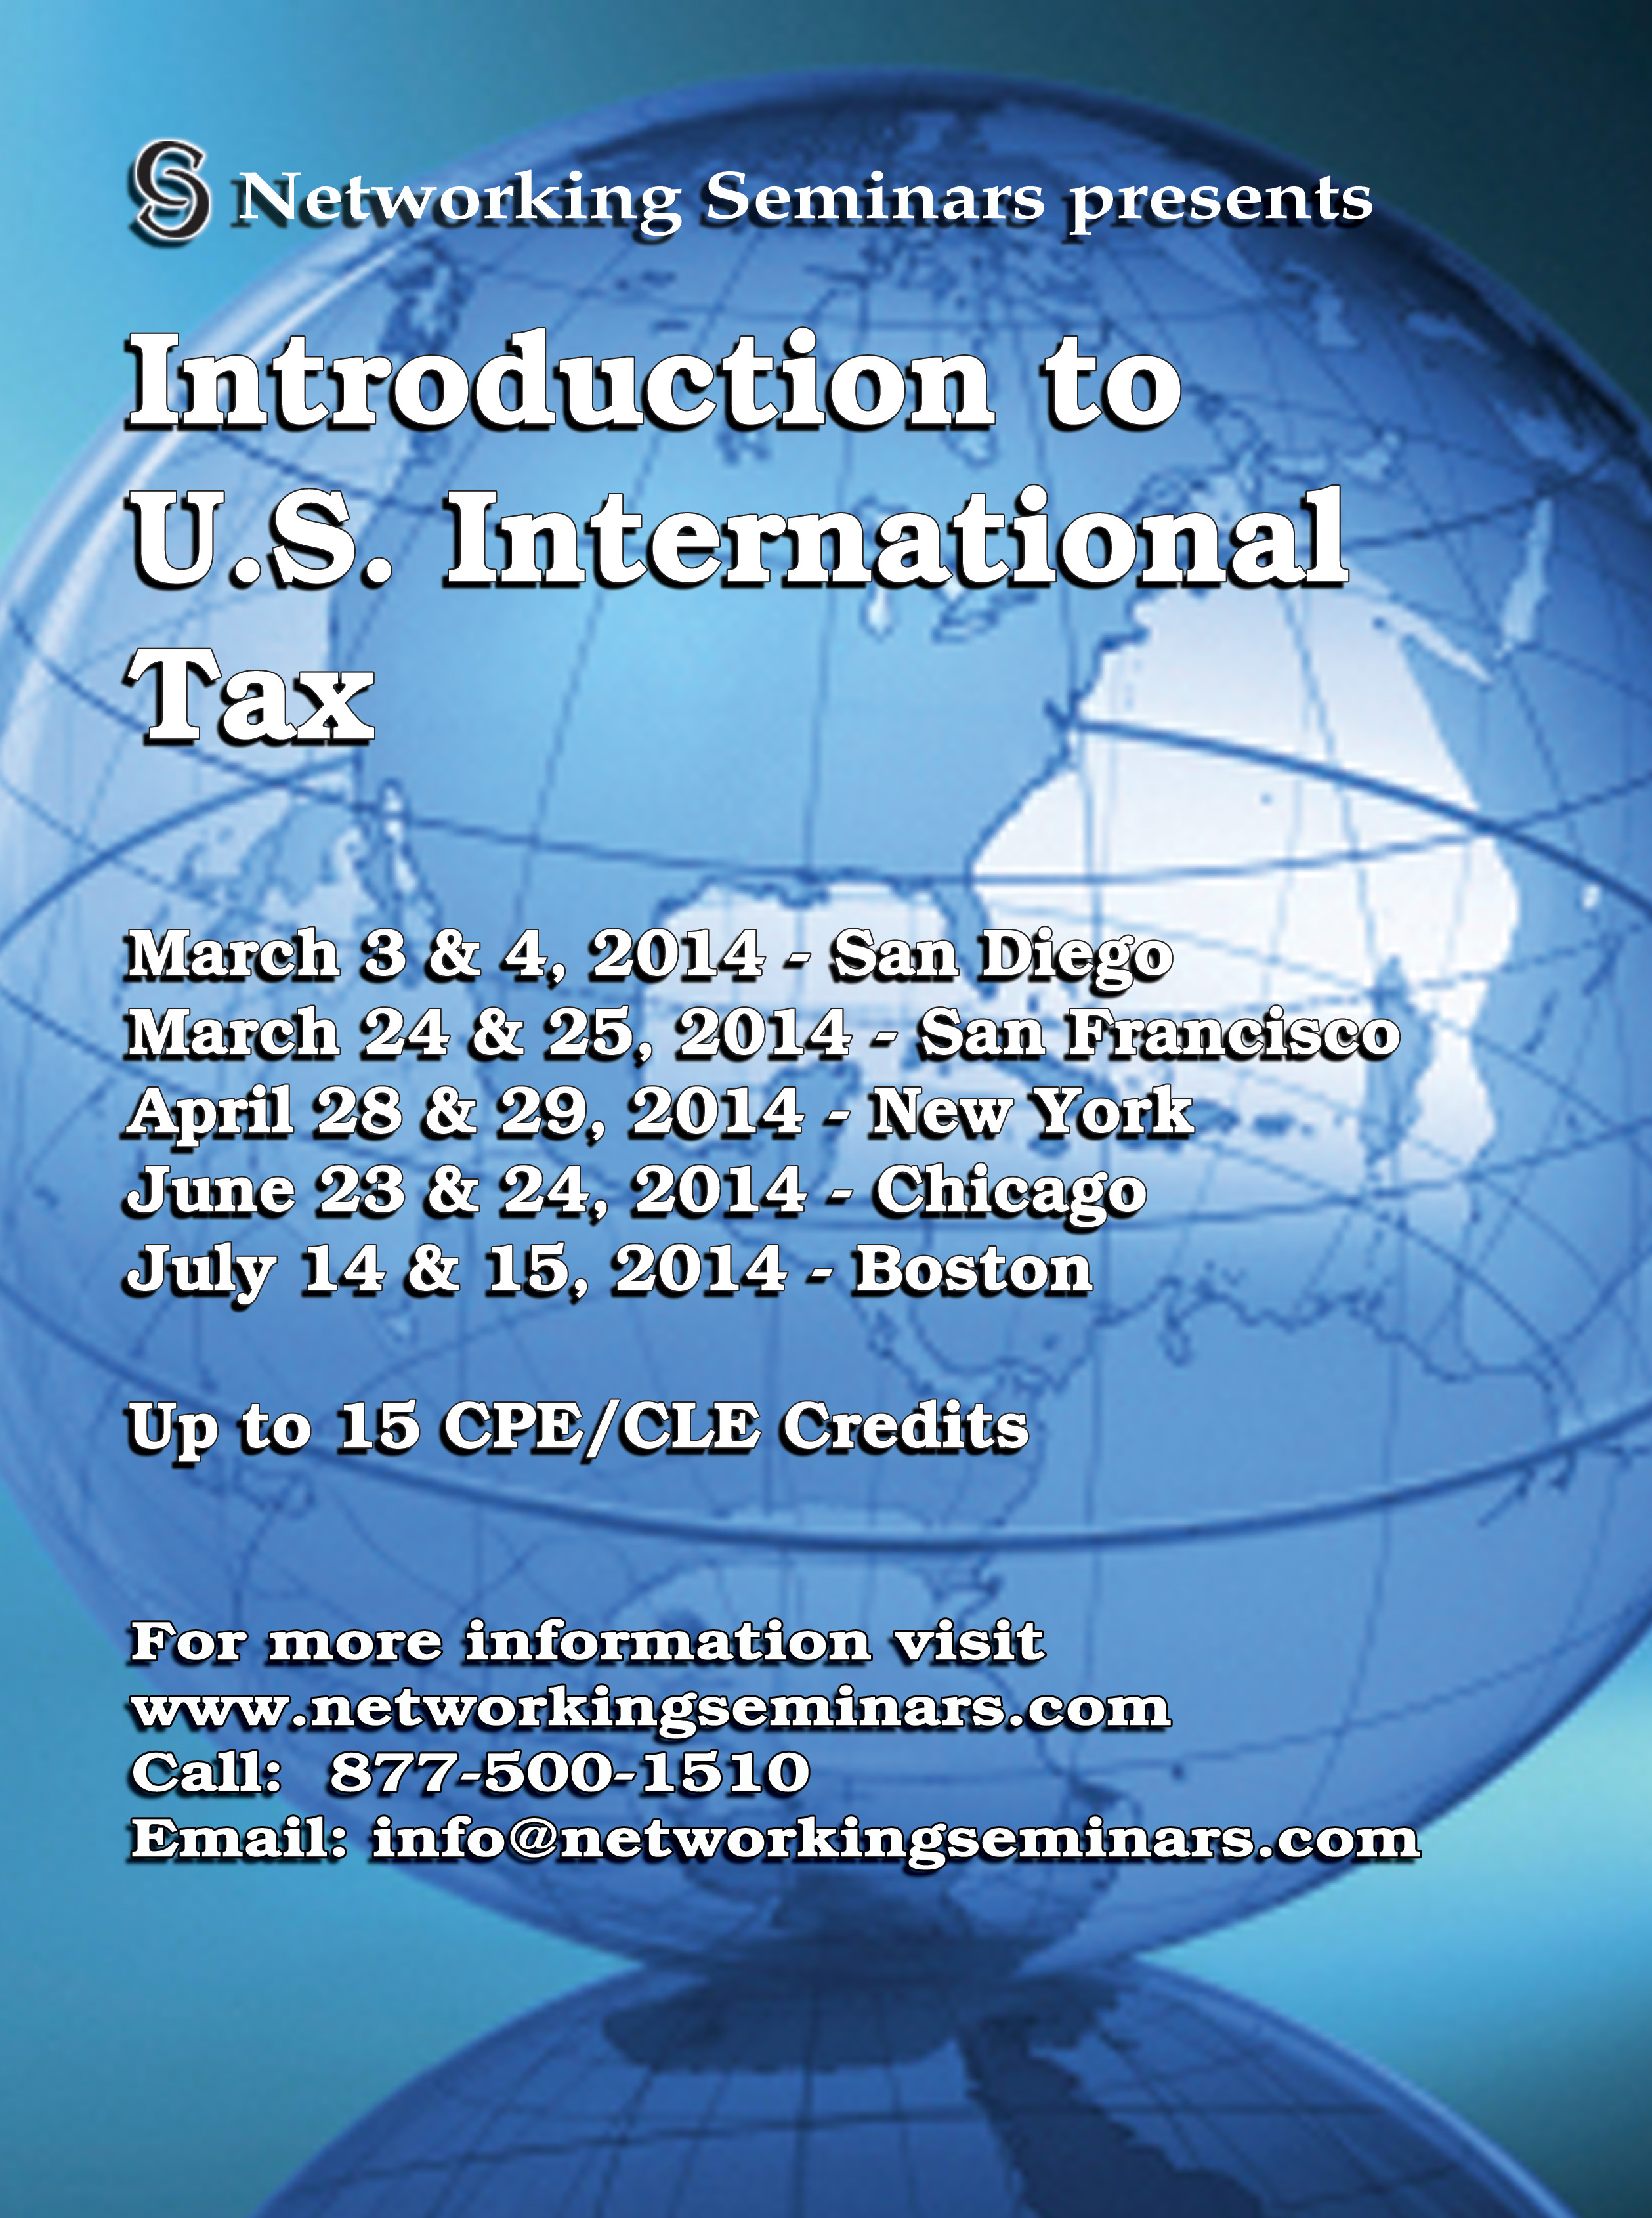 Introduction to U.S International Tax Seminar